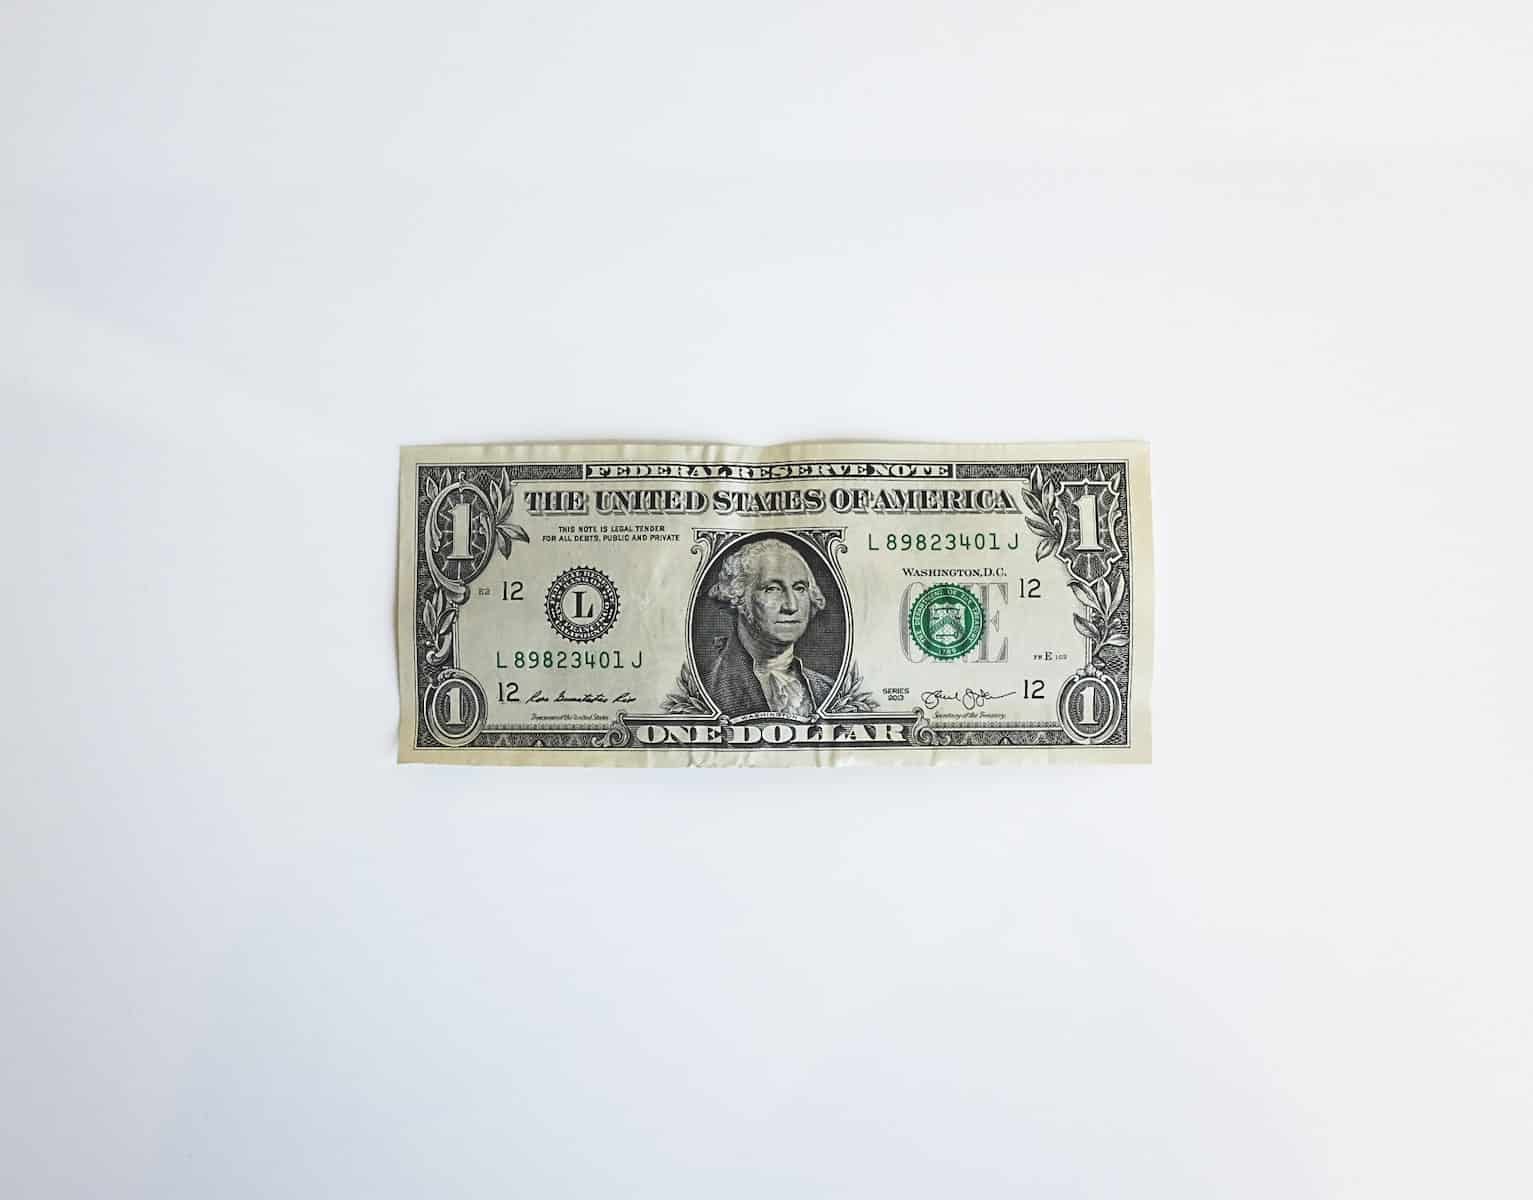 1 U.S. dollar banknote